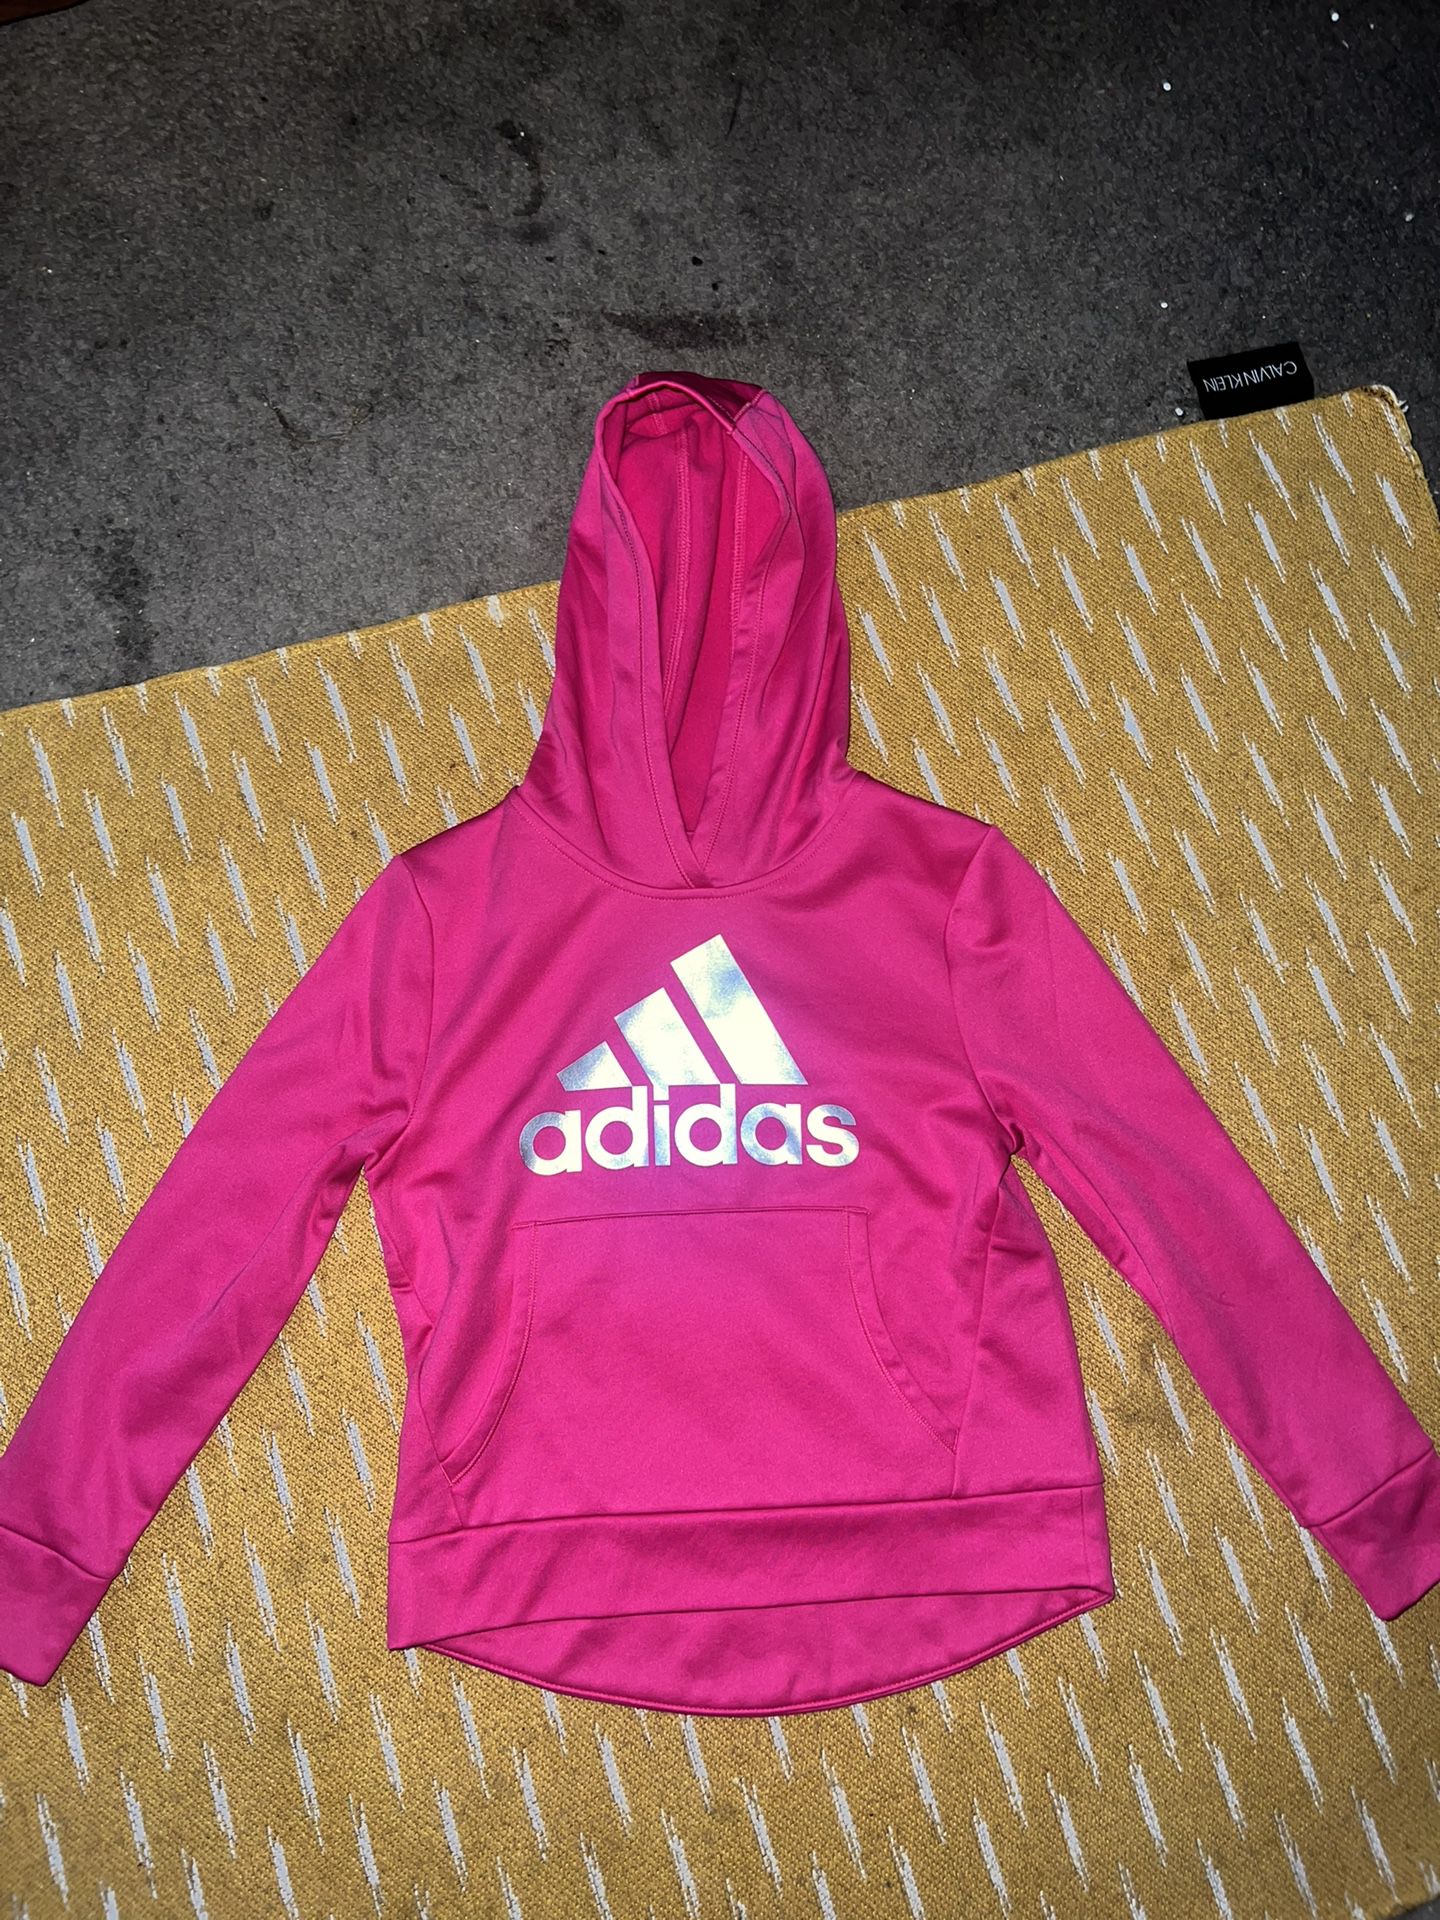 Girls Adidas Sweater Pink  10/12 Worn Once $5